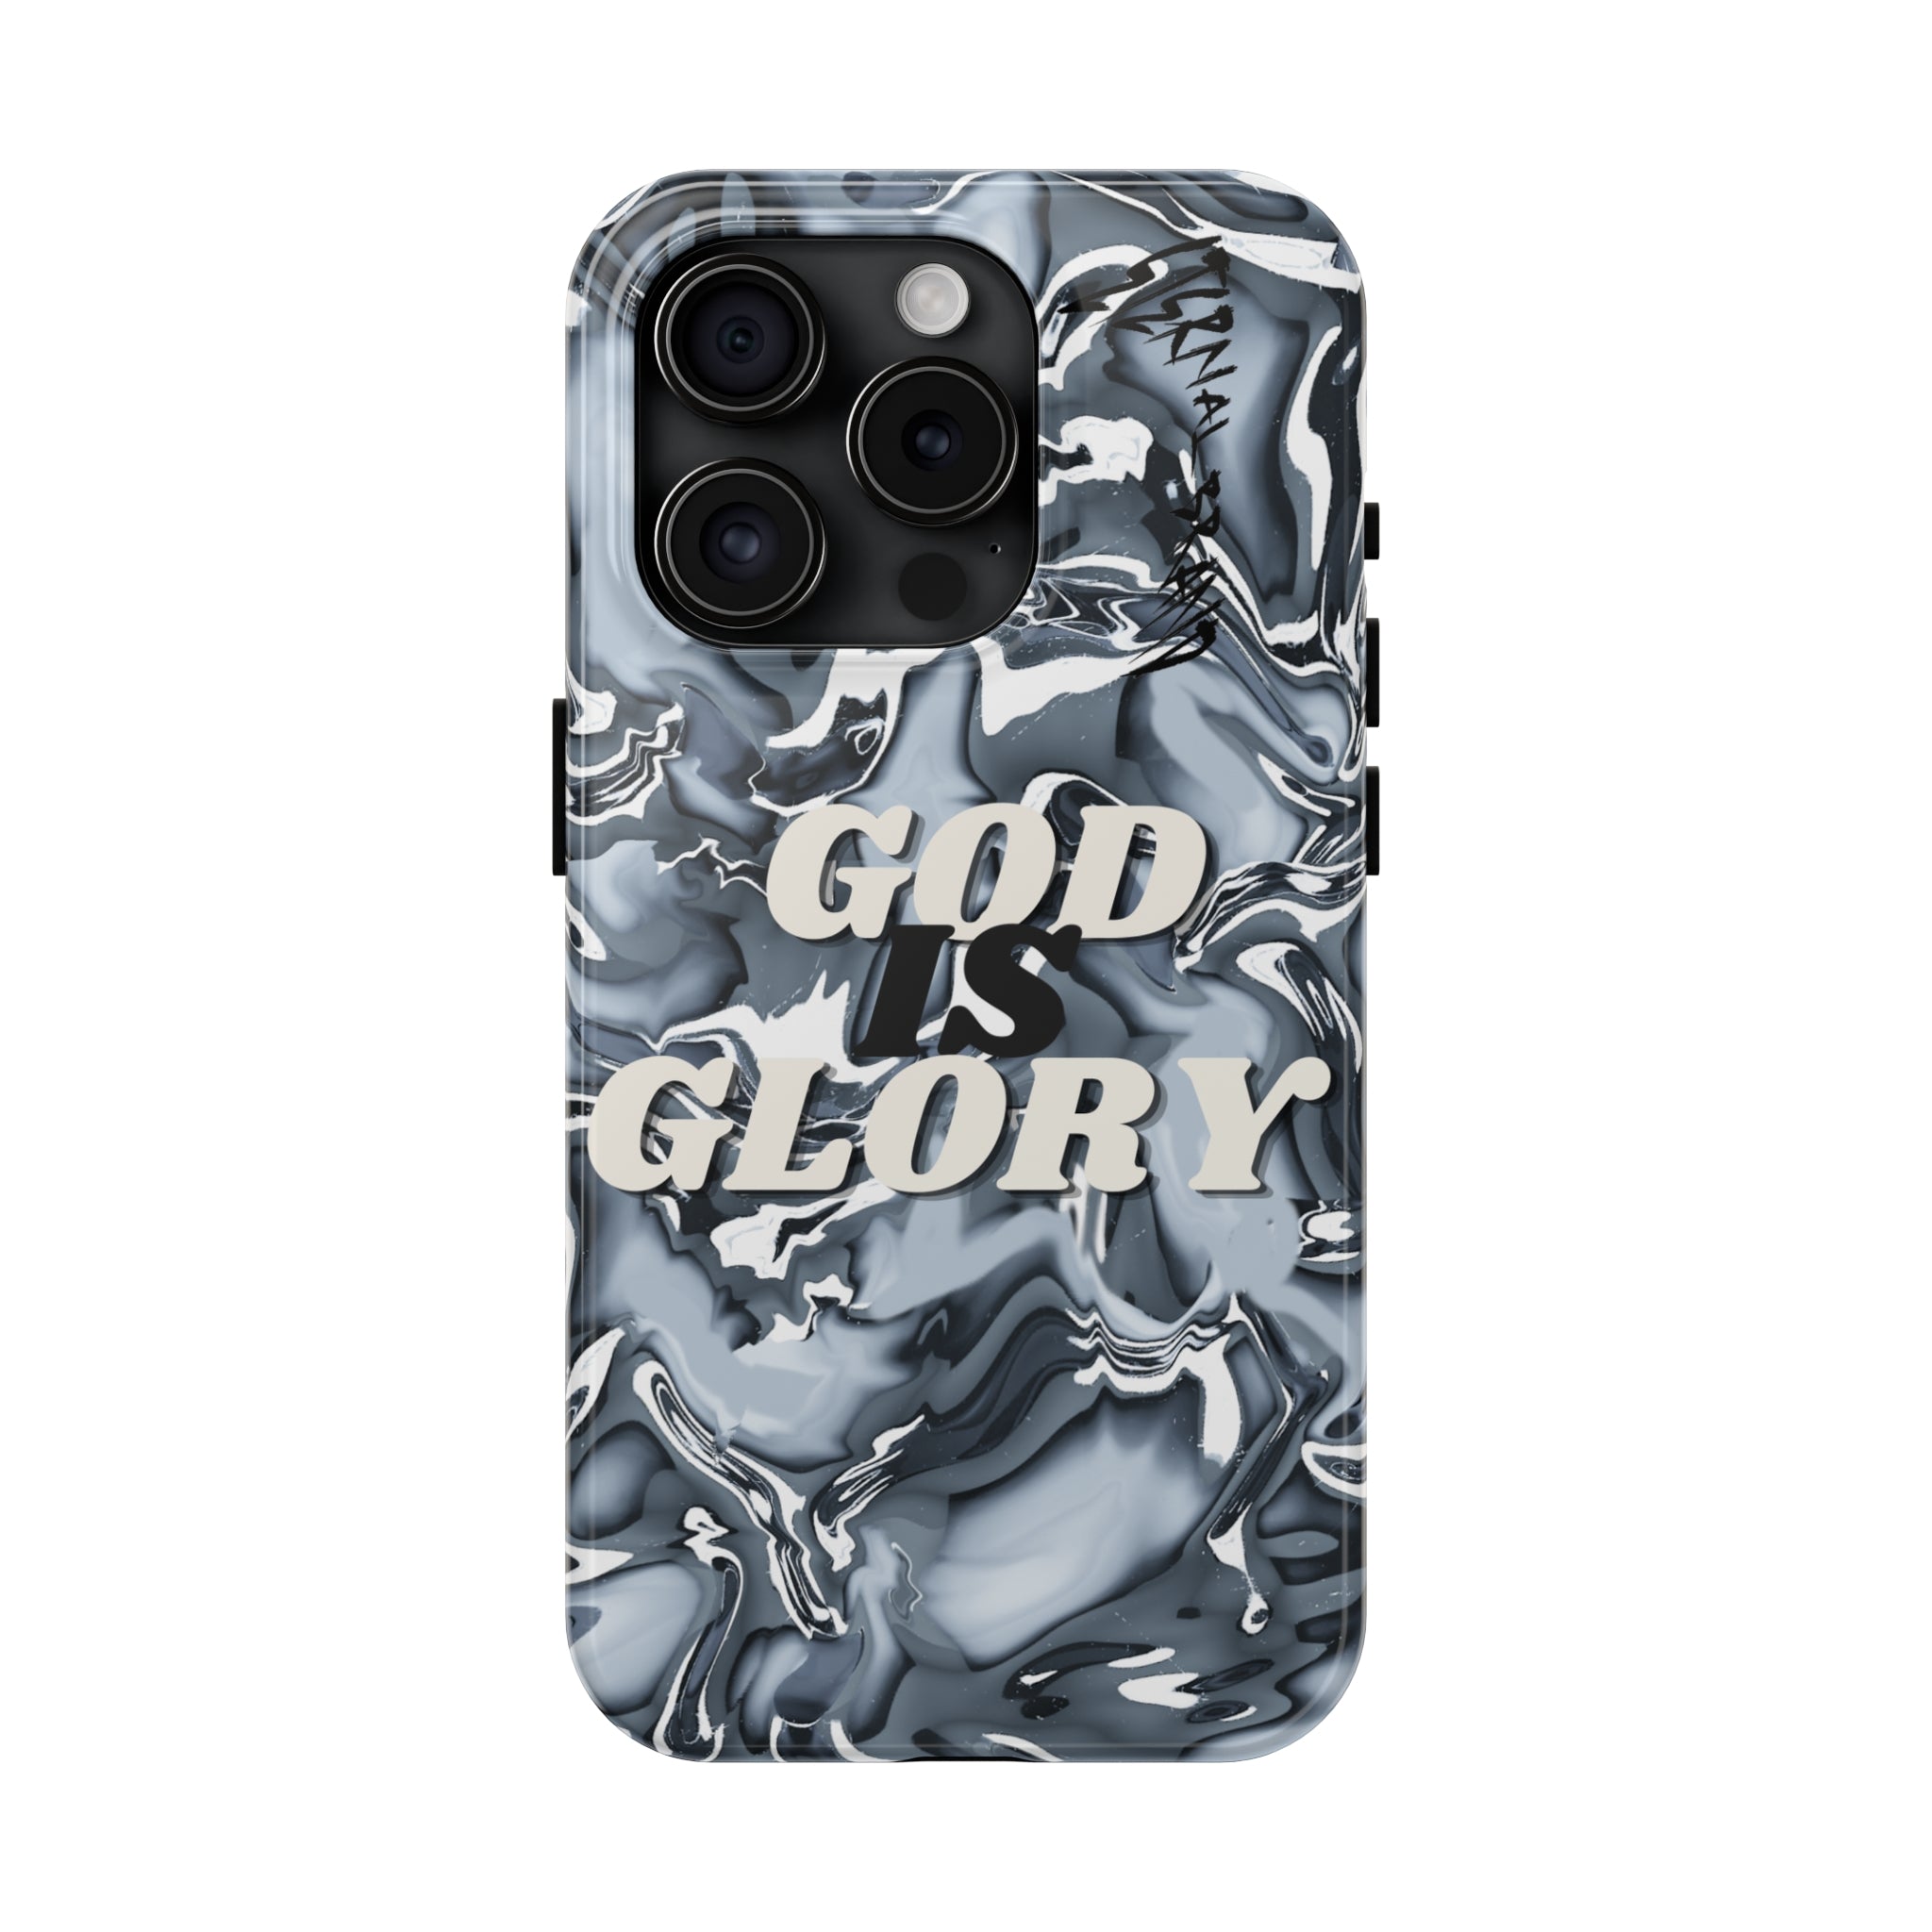 Glory (Hard) Bible Phone Case